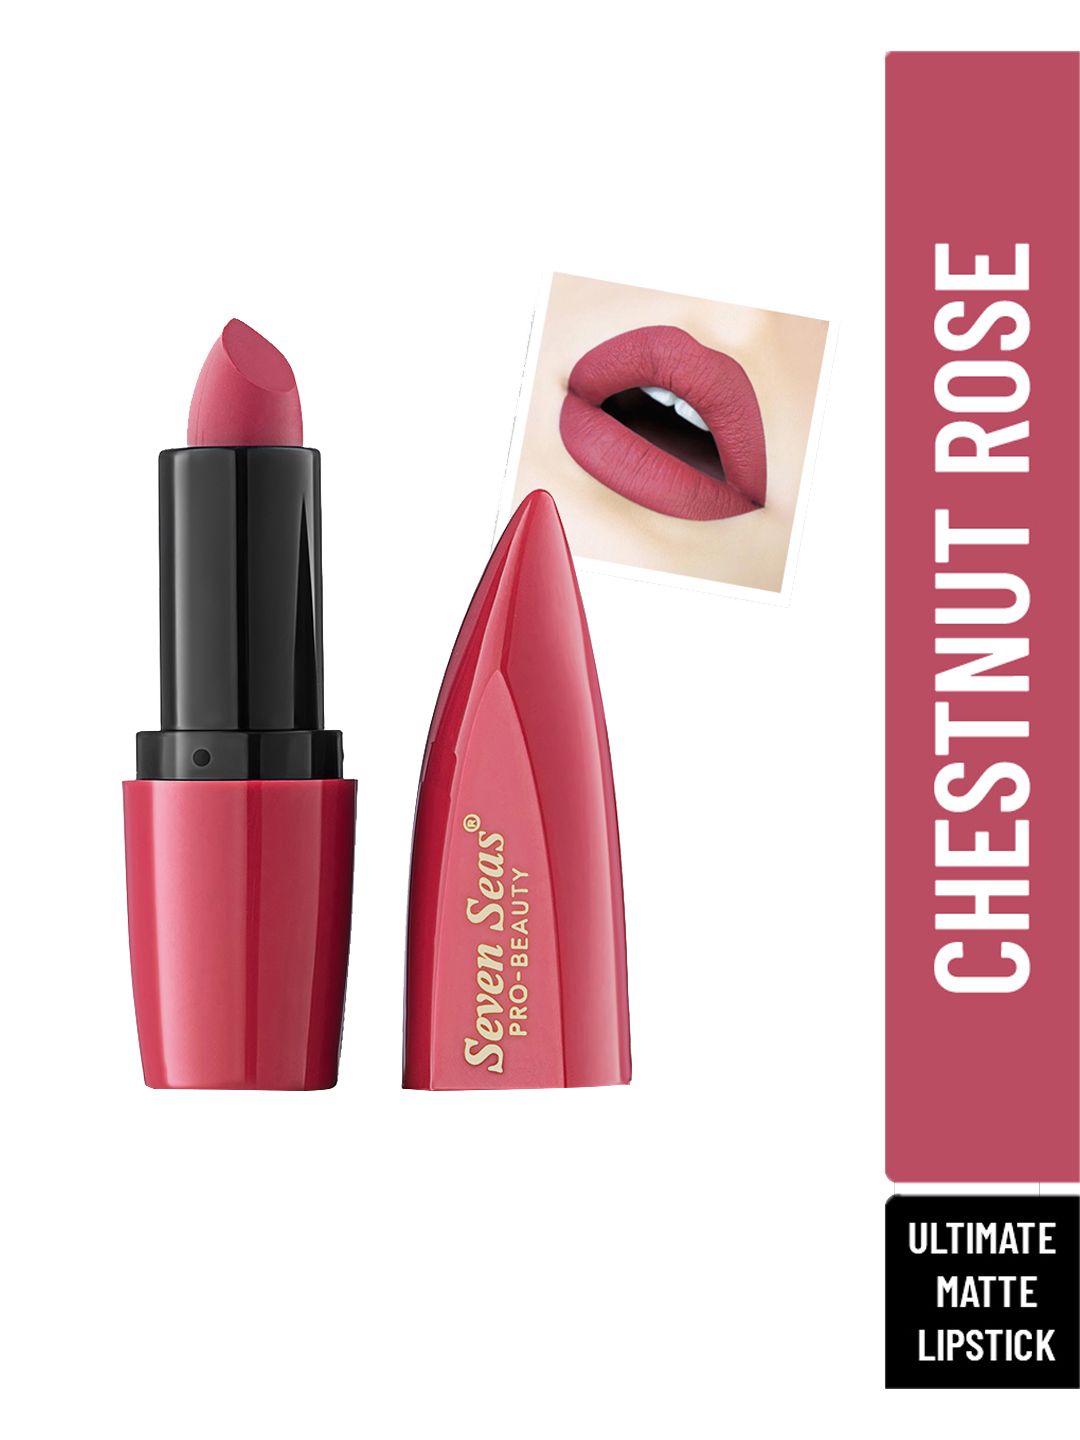 Seven Seas Ultimate Smudge Proof Full Coverage Matte Bullet Lipstick: Chestnut Rose Price in India